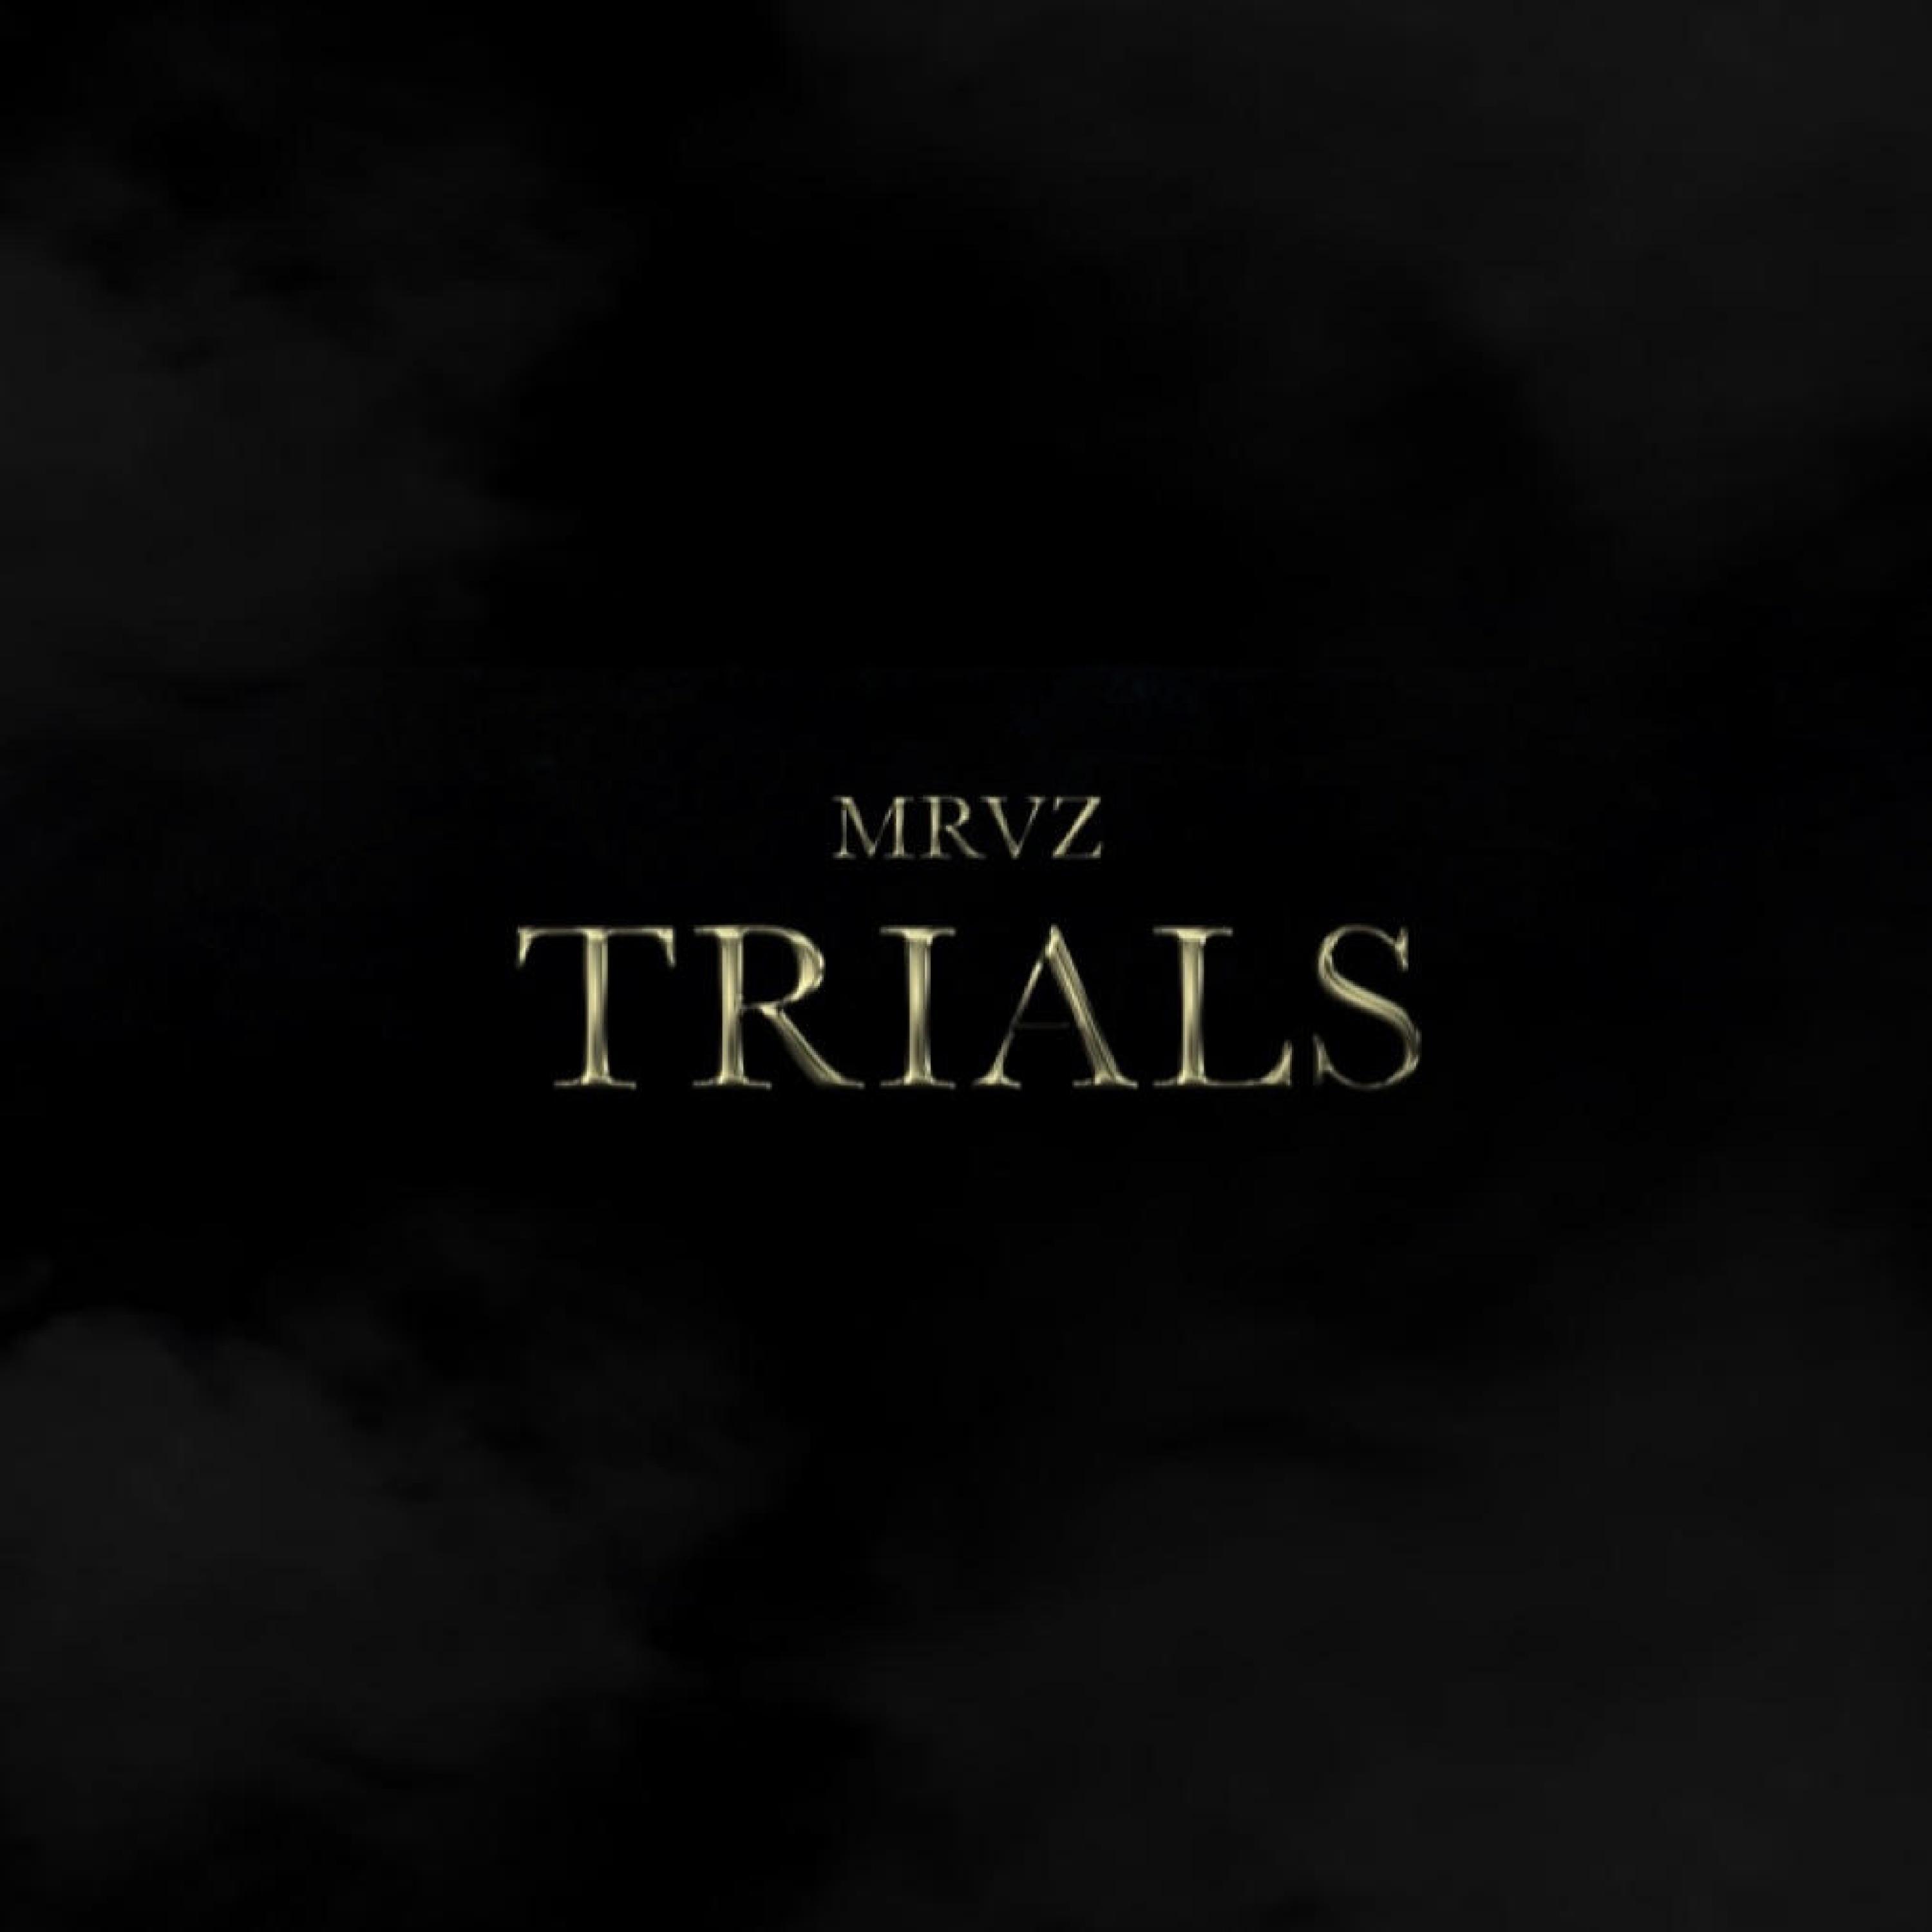 Mrvz - TRIALS